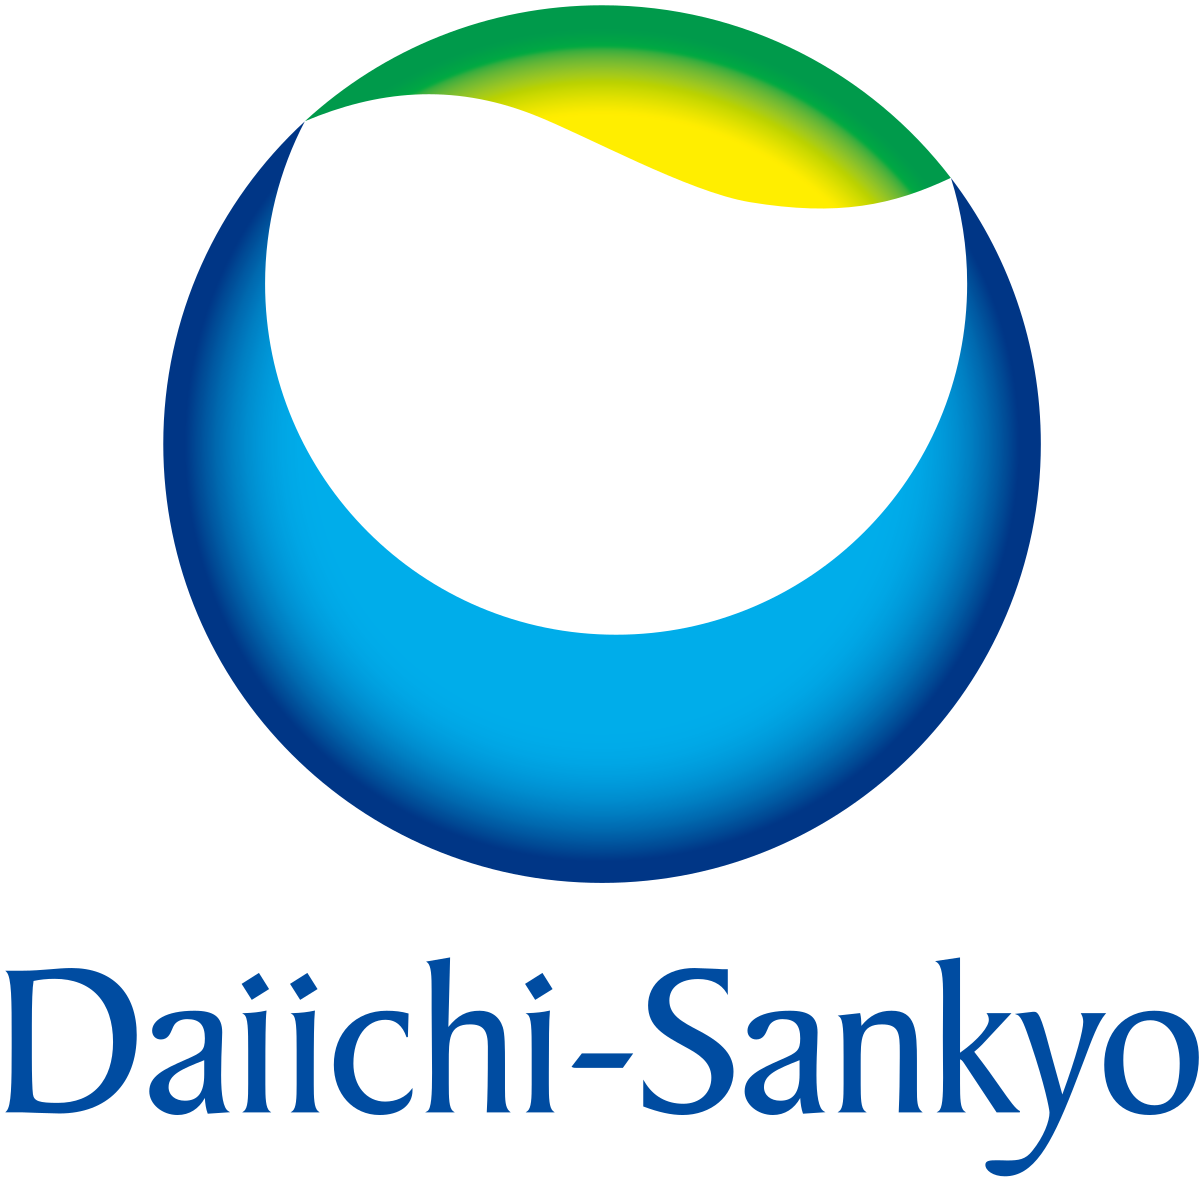 Expert Speaker Companies - Daiichi sankyo